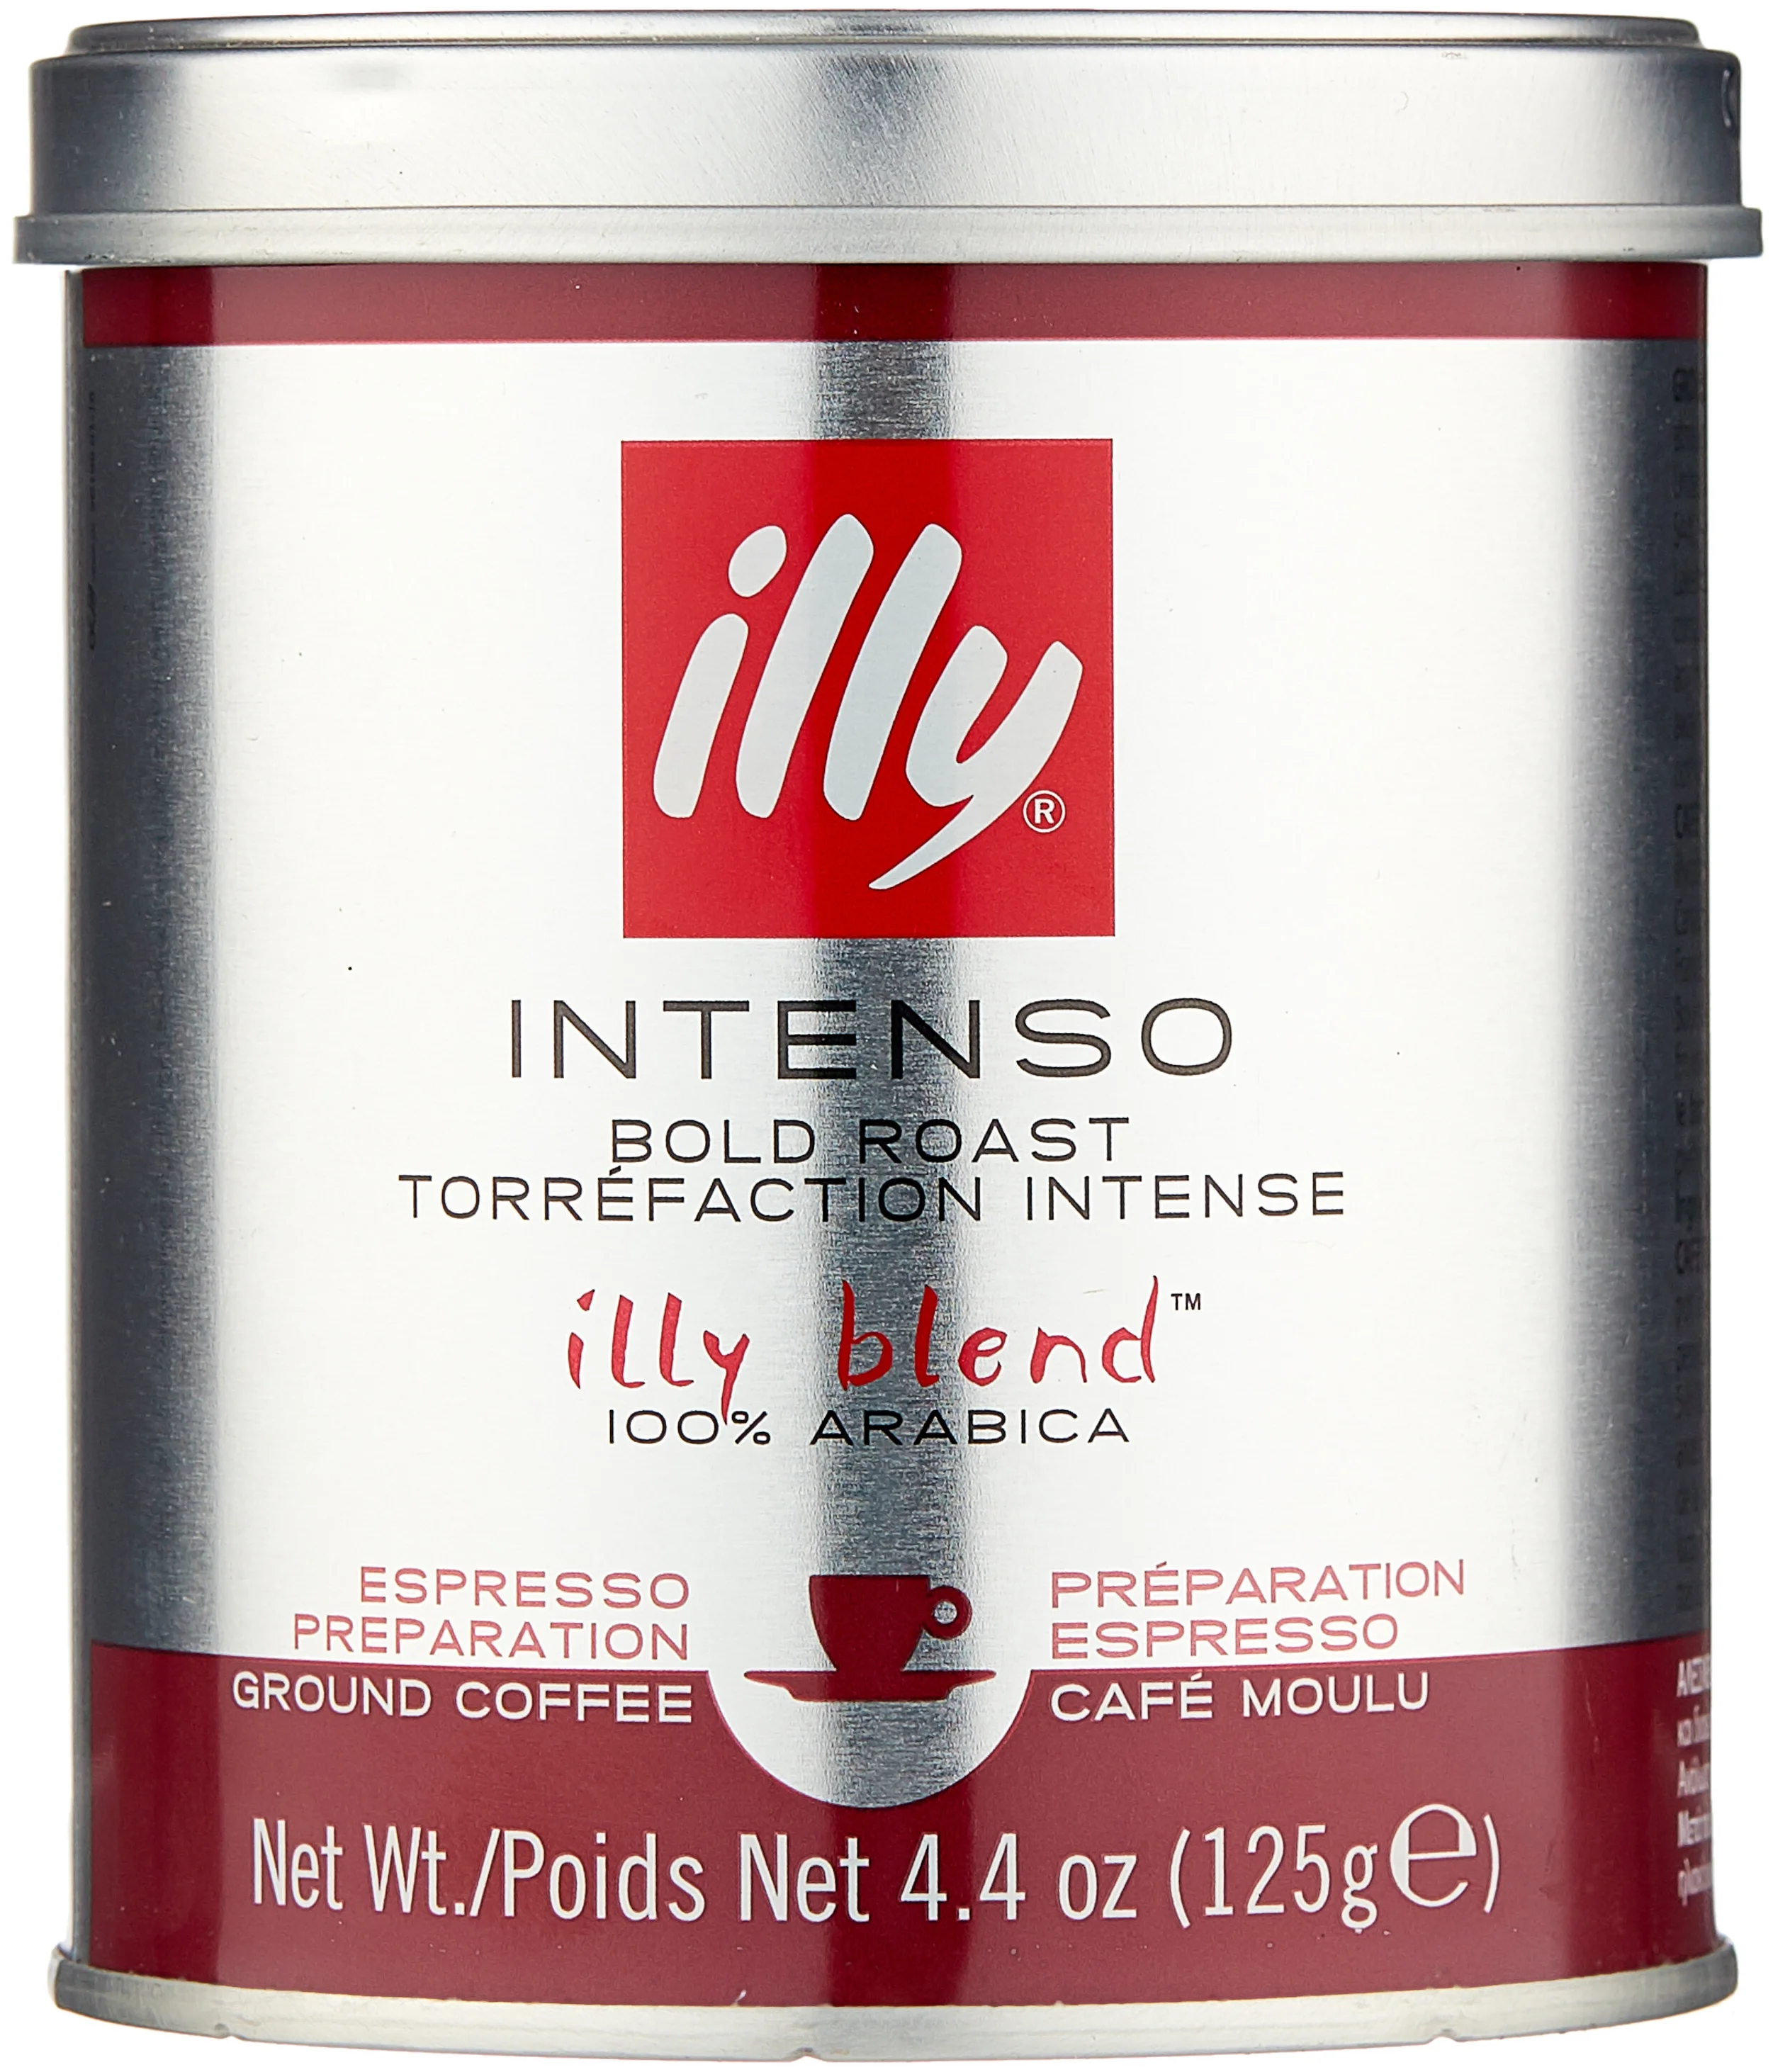 Illy "Intenso Espresso" - помол: средний